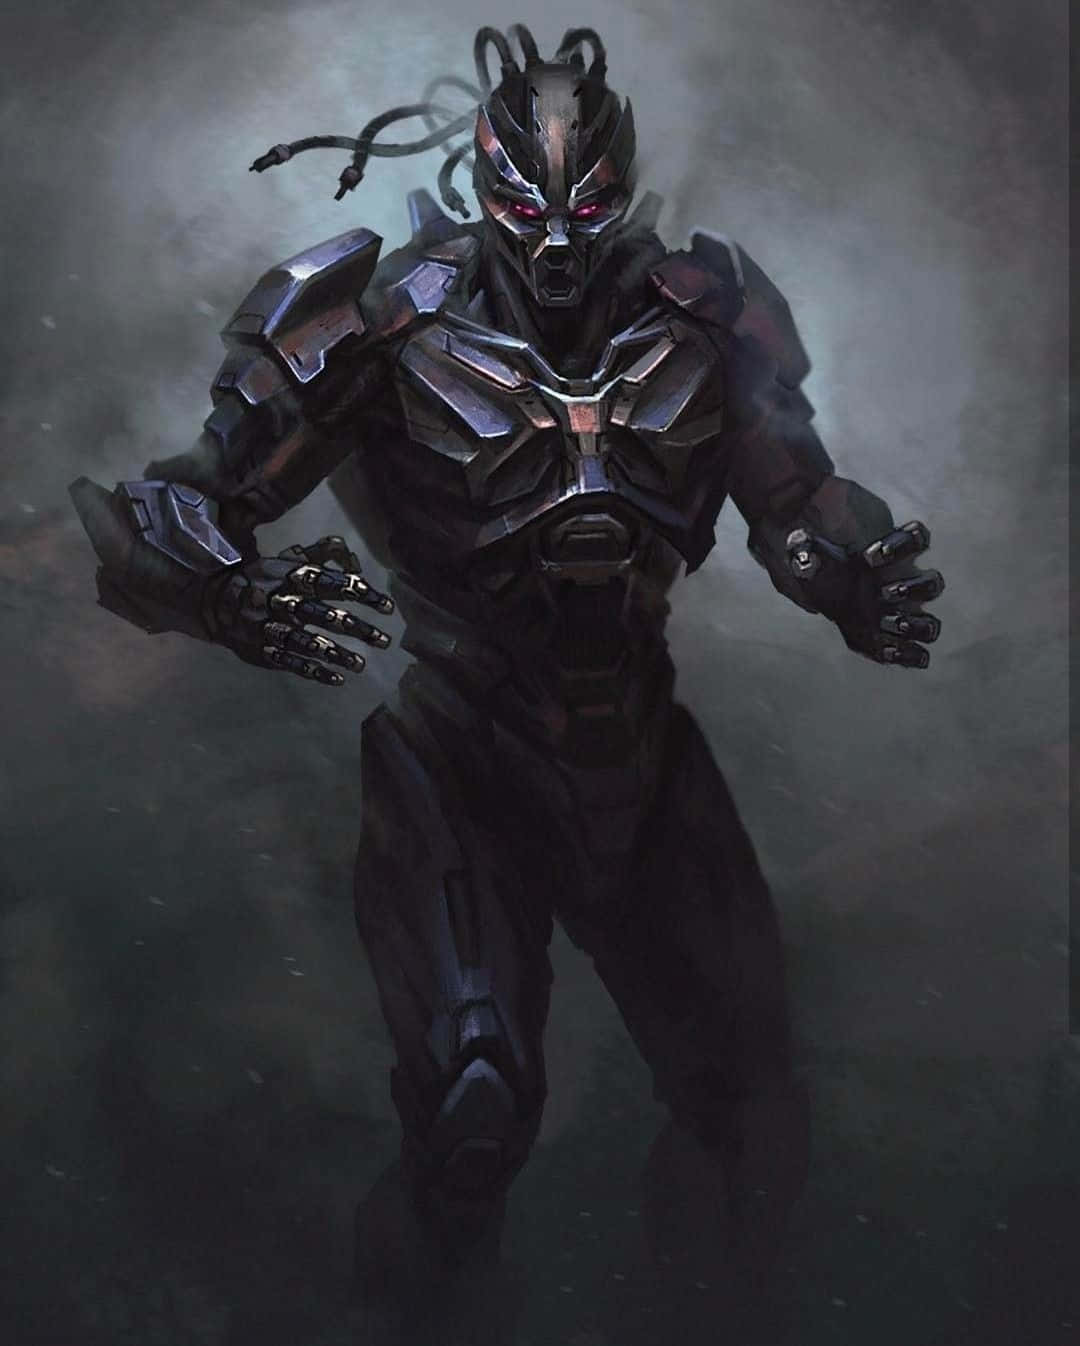 Triborg in Action - Mortal Kombat Wallpaper